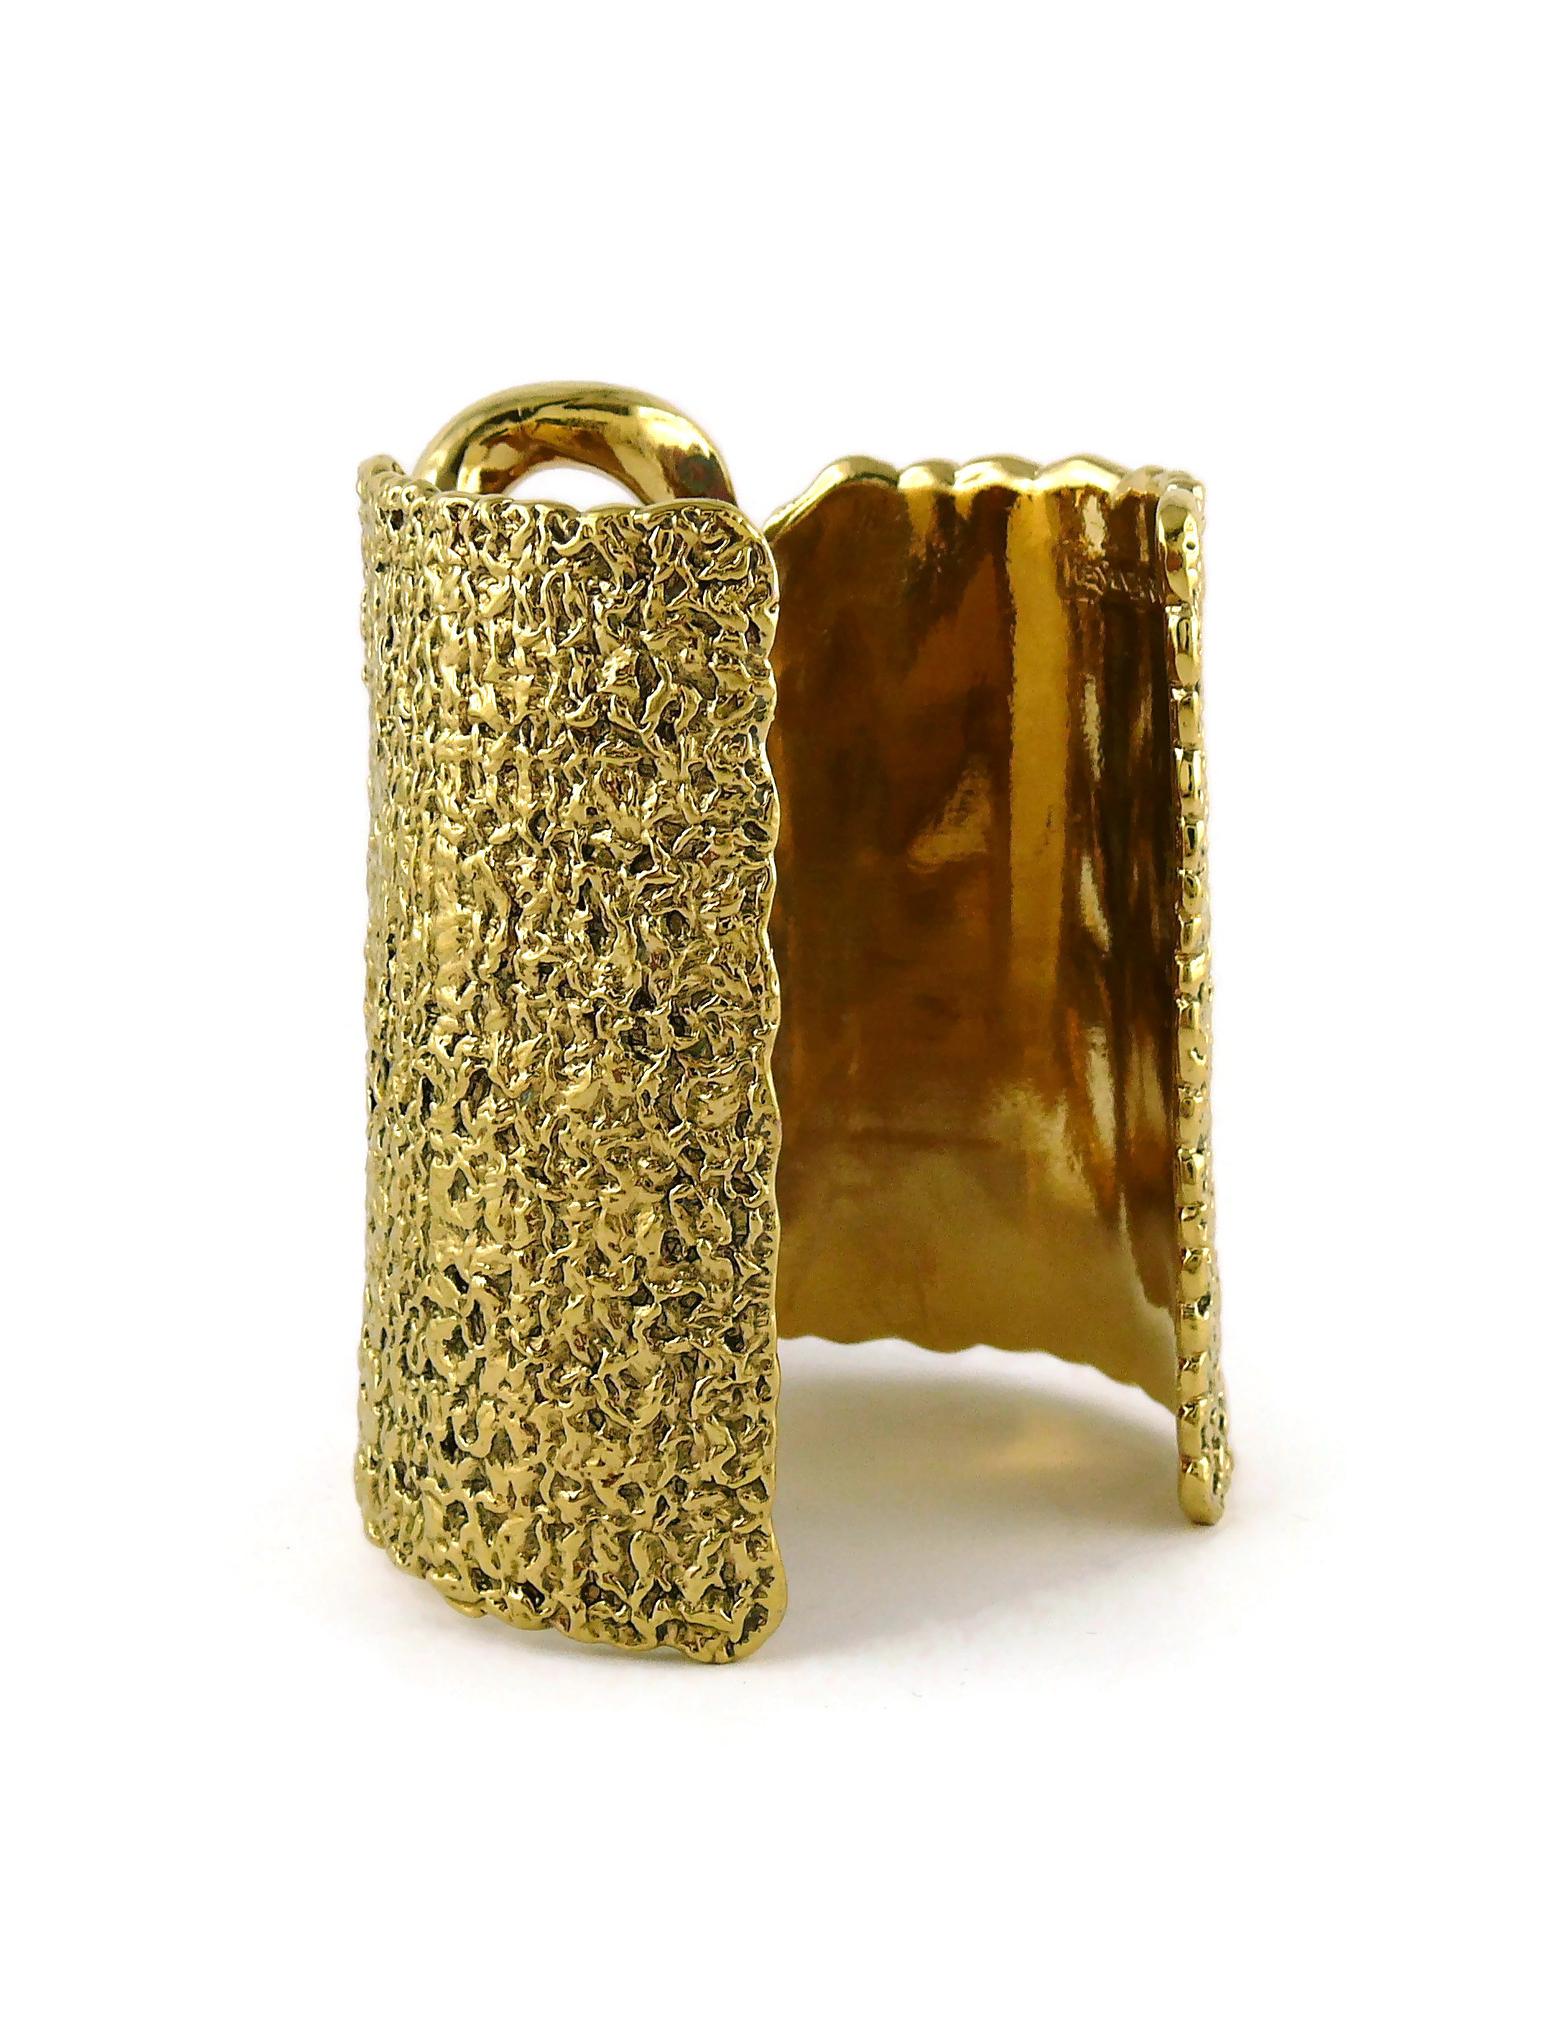 YVES SAINT LAURENT YSL Massive Gold Toned Chain Cuff Bracelet For Sale 6